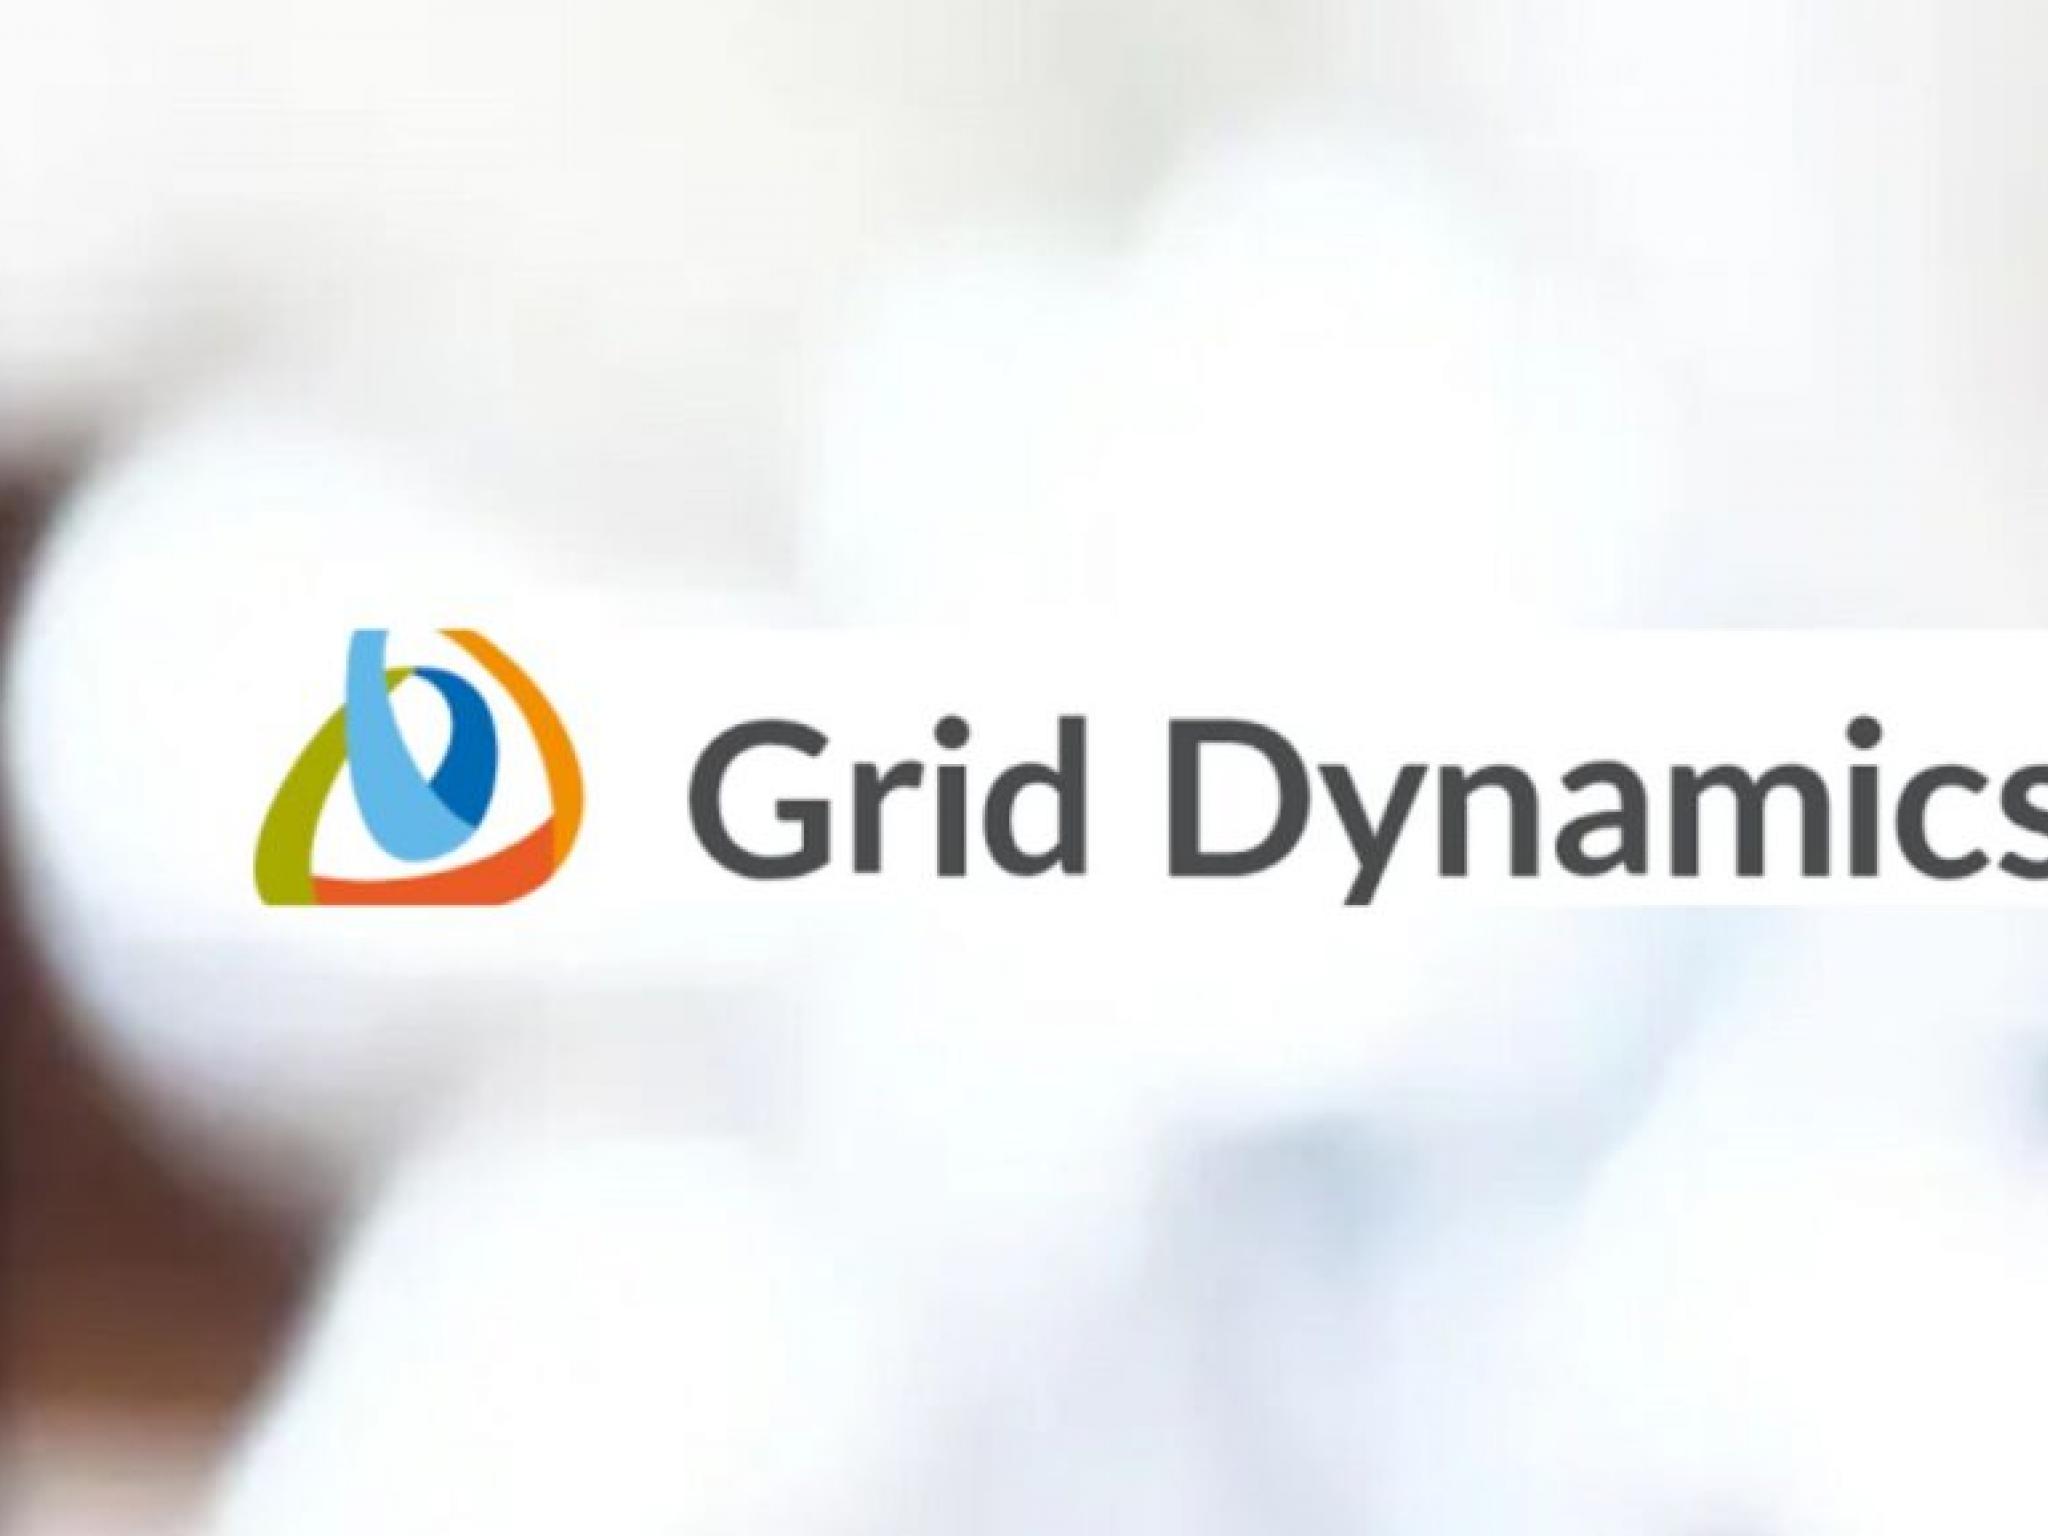  grid-dynamics-set-for-revenue-surge-genai-partnerships-analyst 